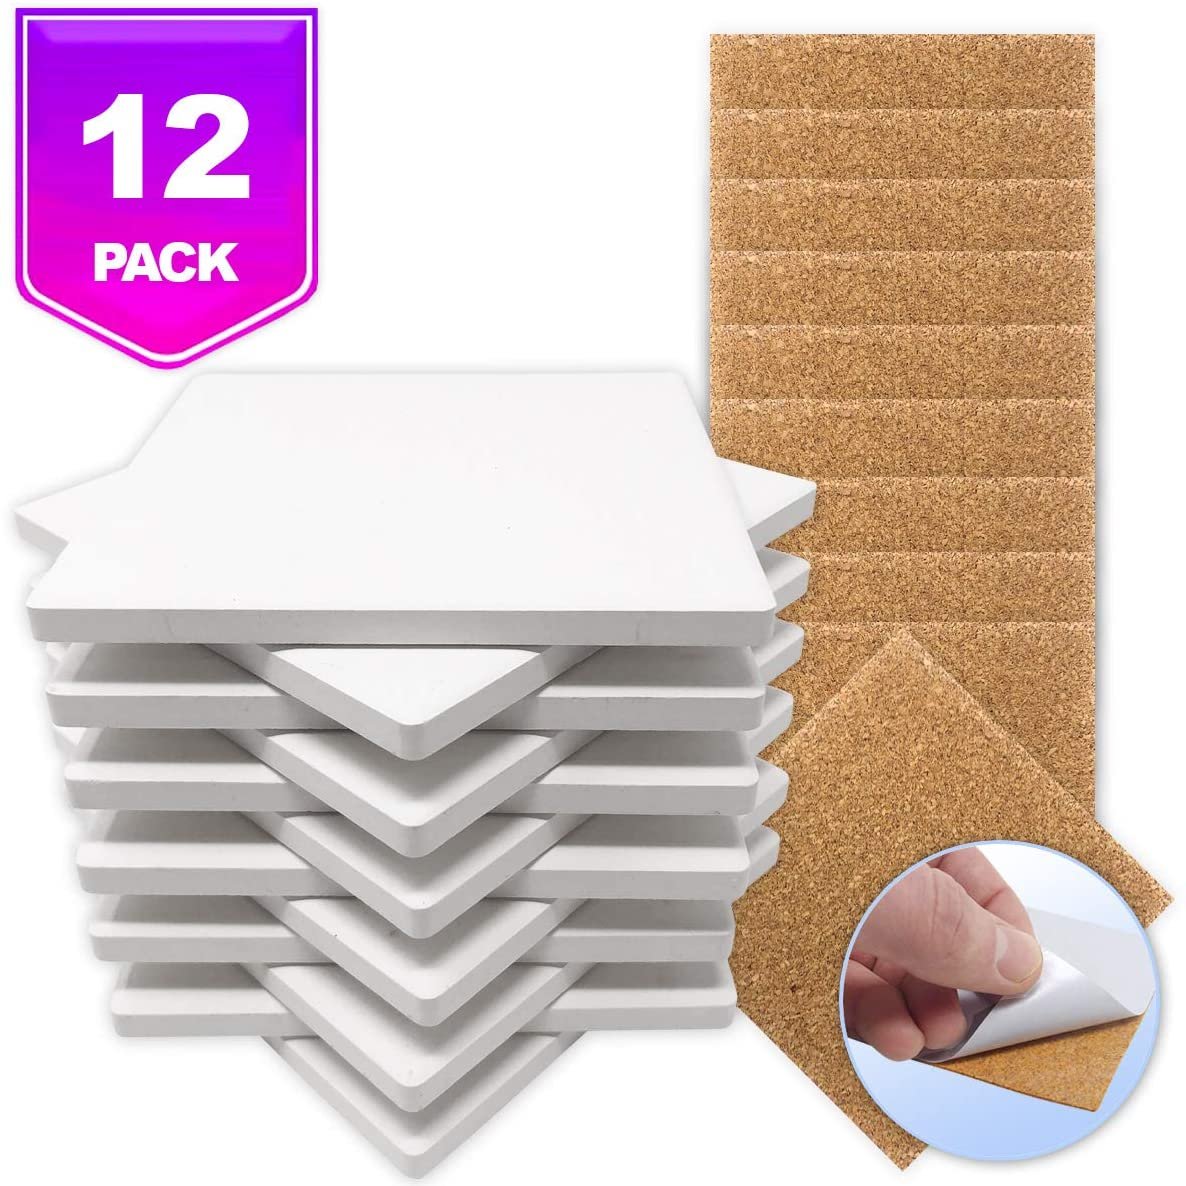 12 Ceramic Tiles, Mod Podge Sealer, Acrylic Paint, Paint Sponge Brushes